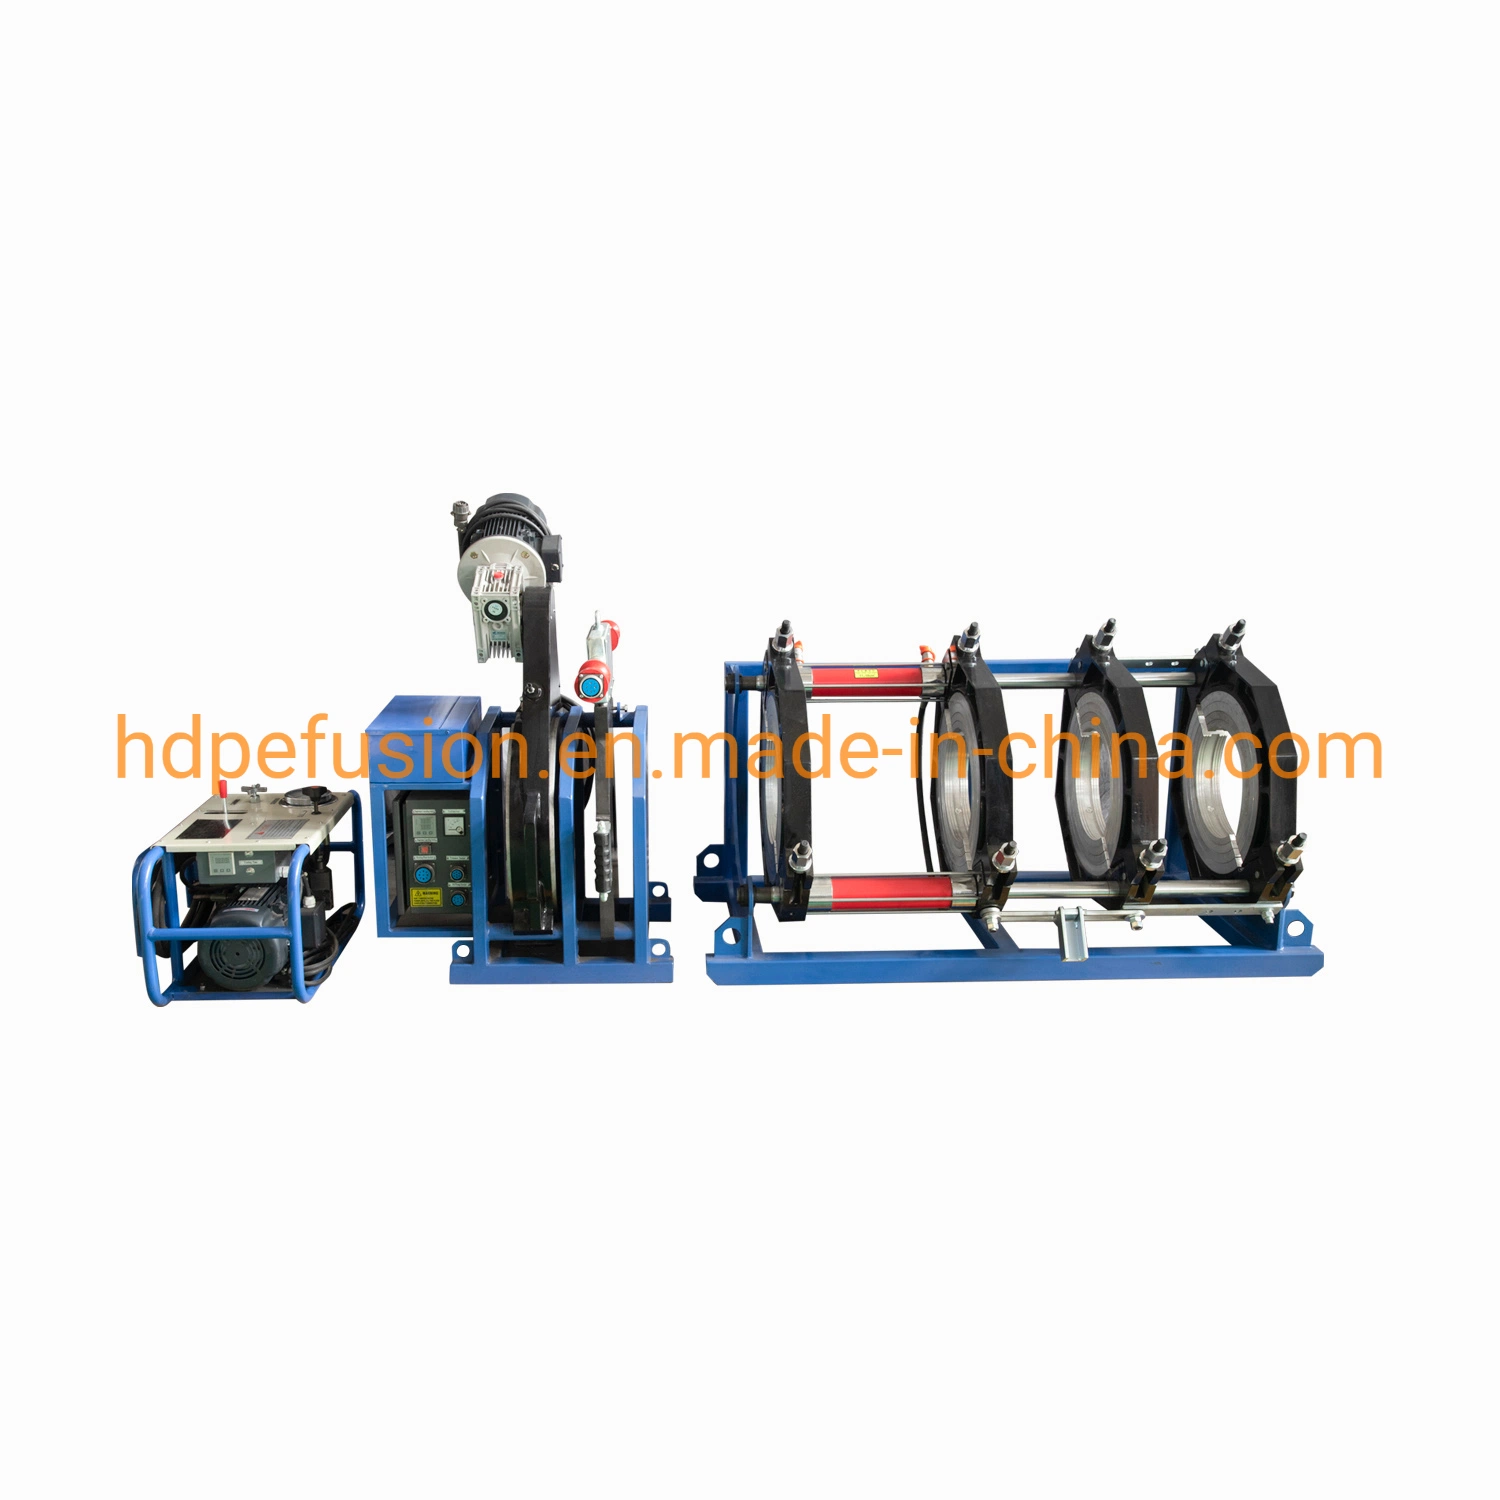 HDPE Fusing Welding Polyethylene Pipe Machine 450mm